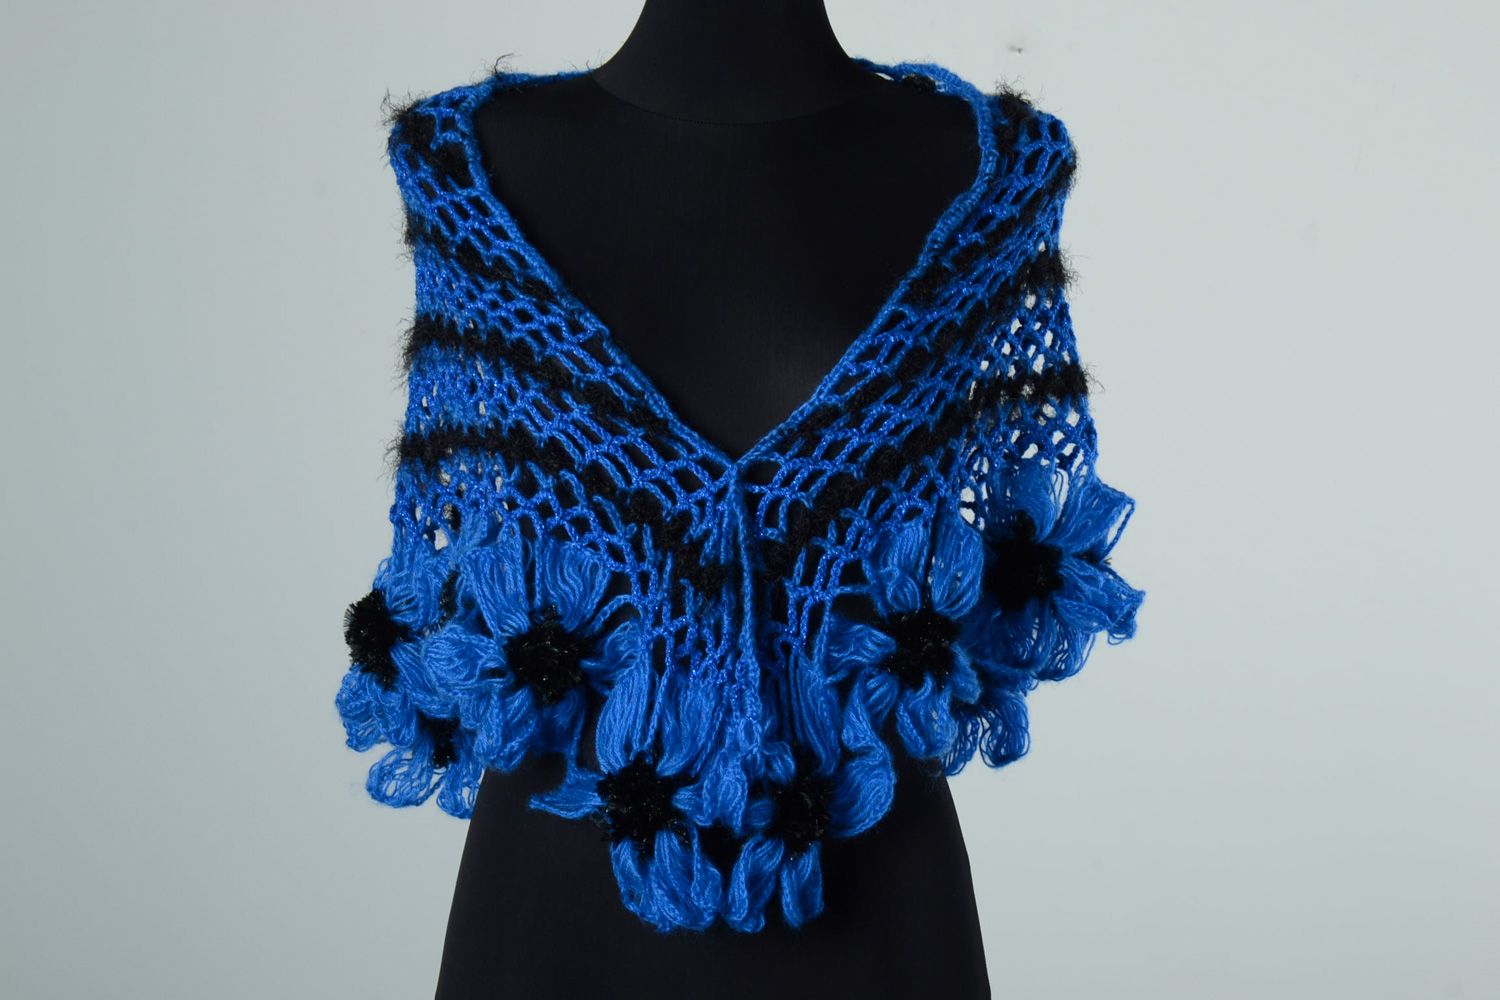 Black and blue handmade crochet women's shawl photo 1